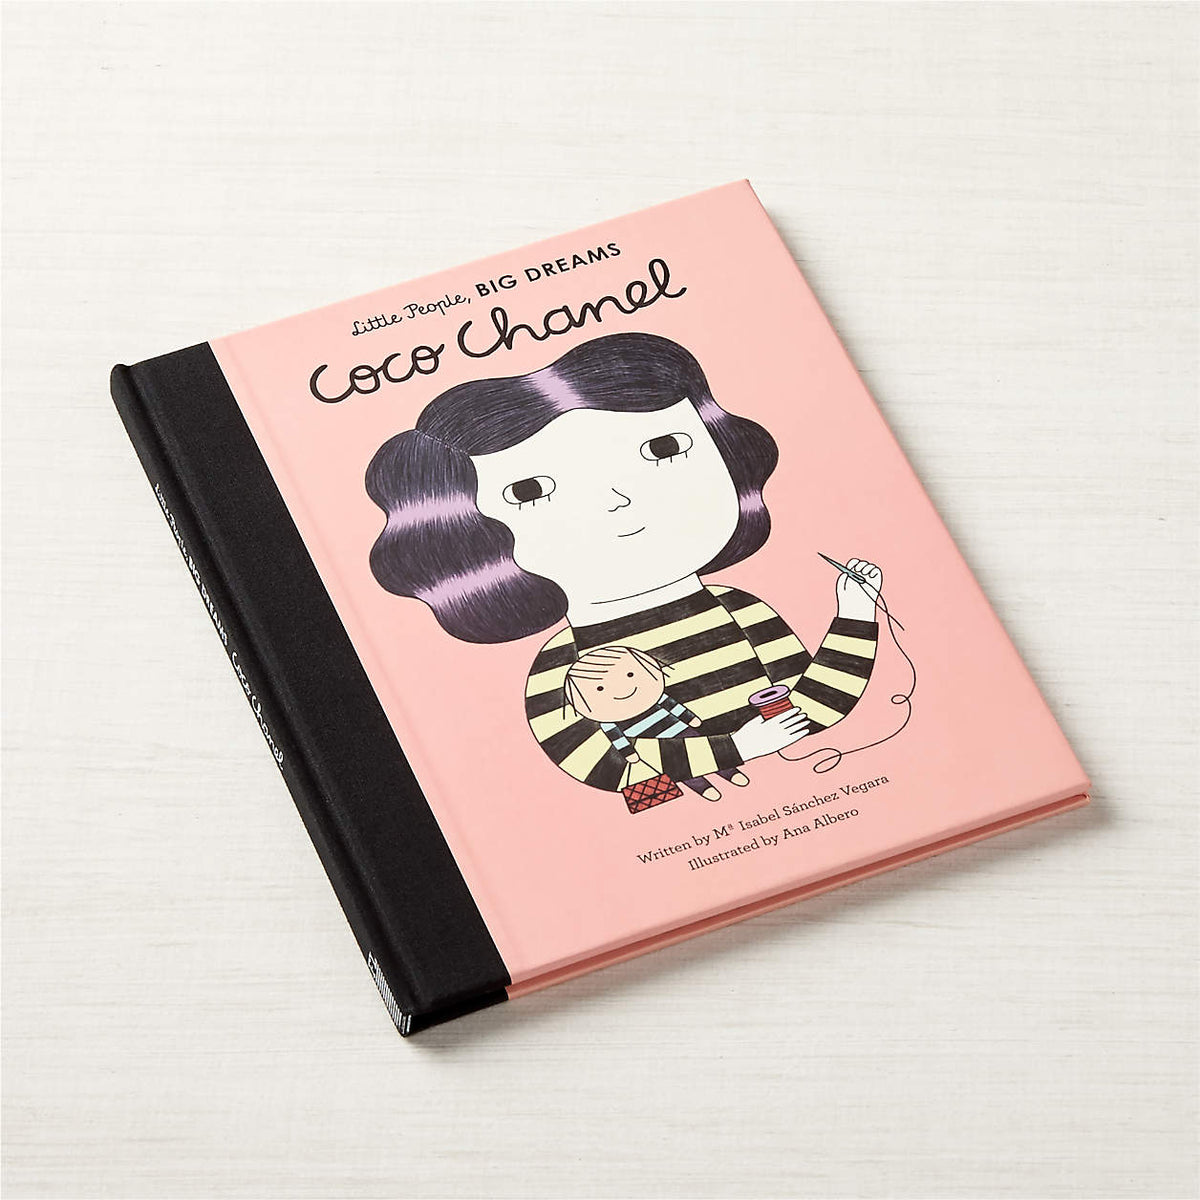 Coco Chanel - (little People, Big Dreams) By Maria Isabel Sanchez Vegara  (paperback) : Target